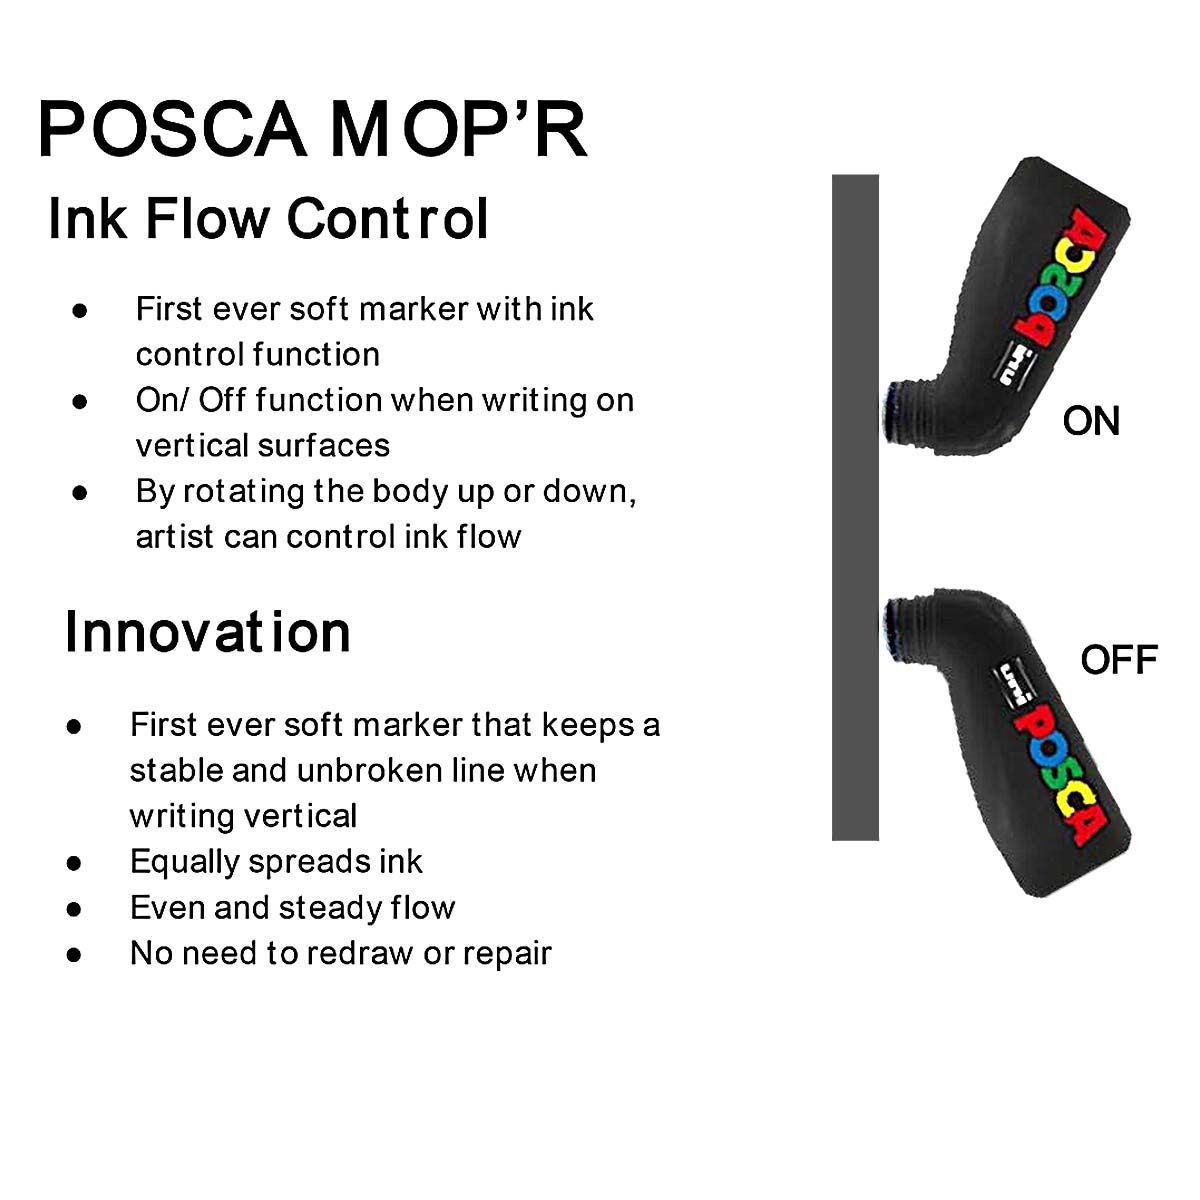 Explore POSCA MOP'R Techniques.mp4 on Vimeo